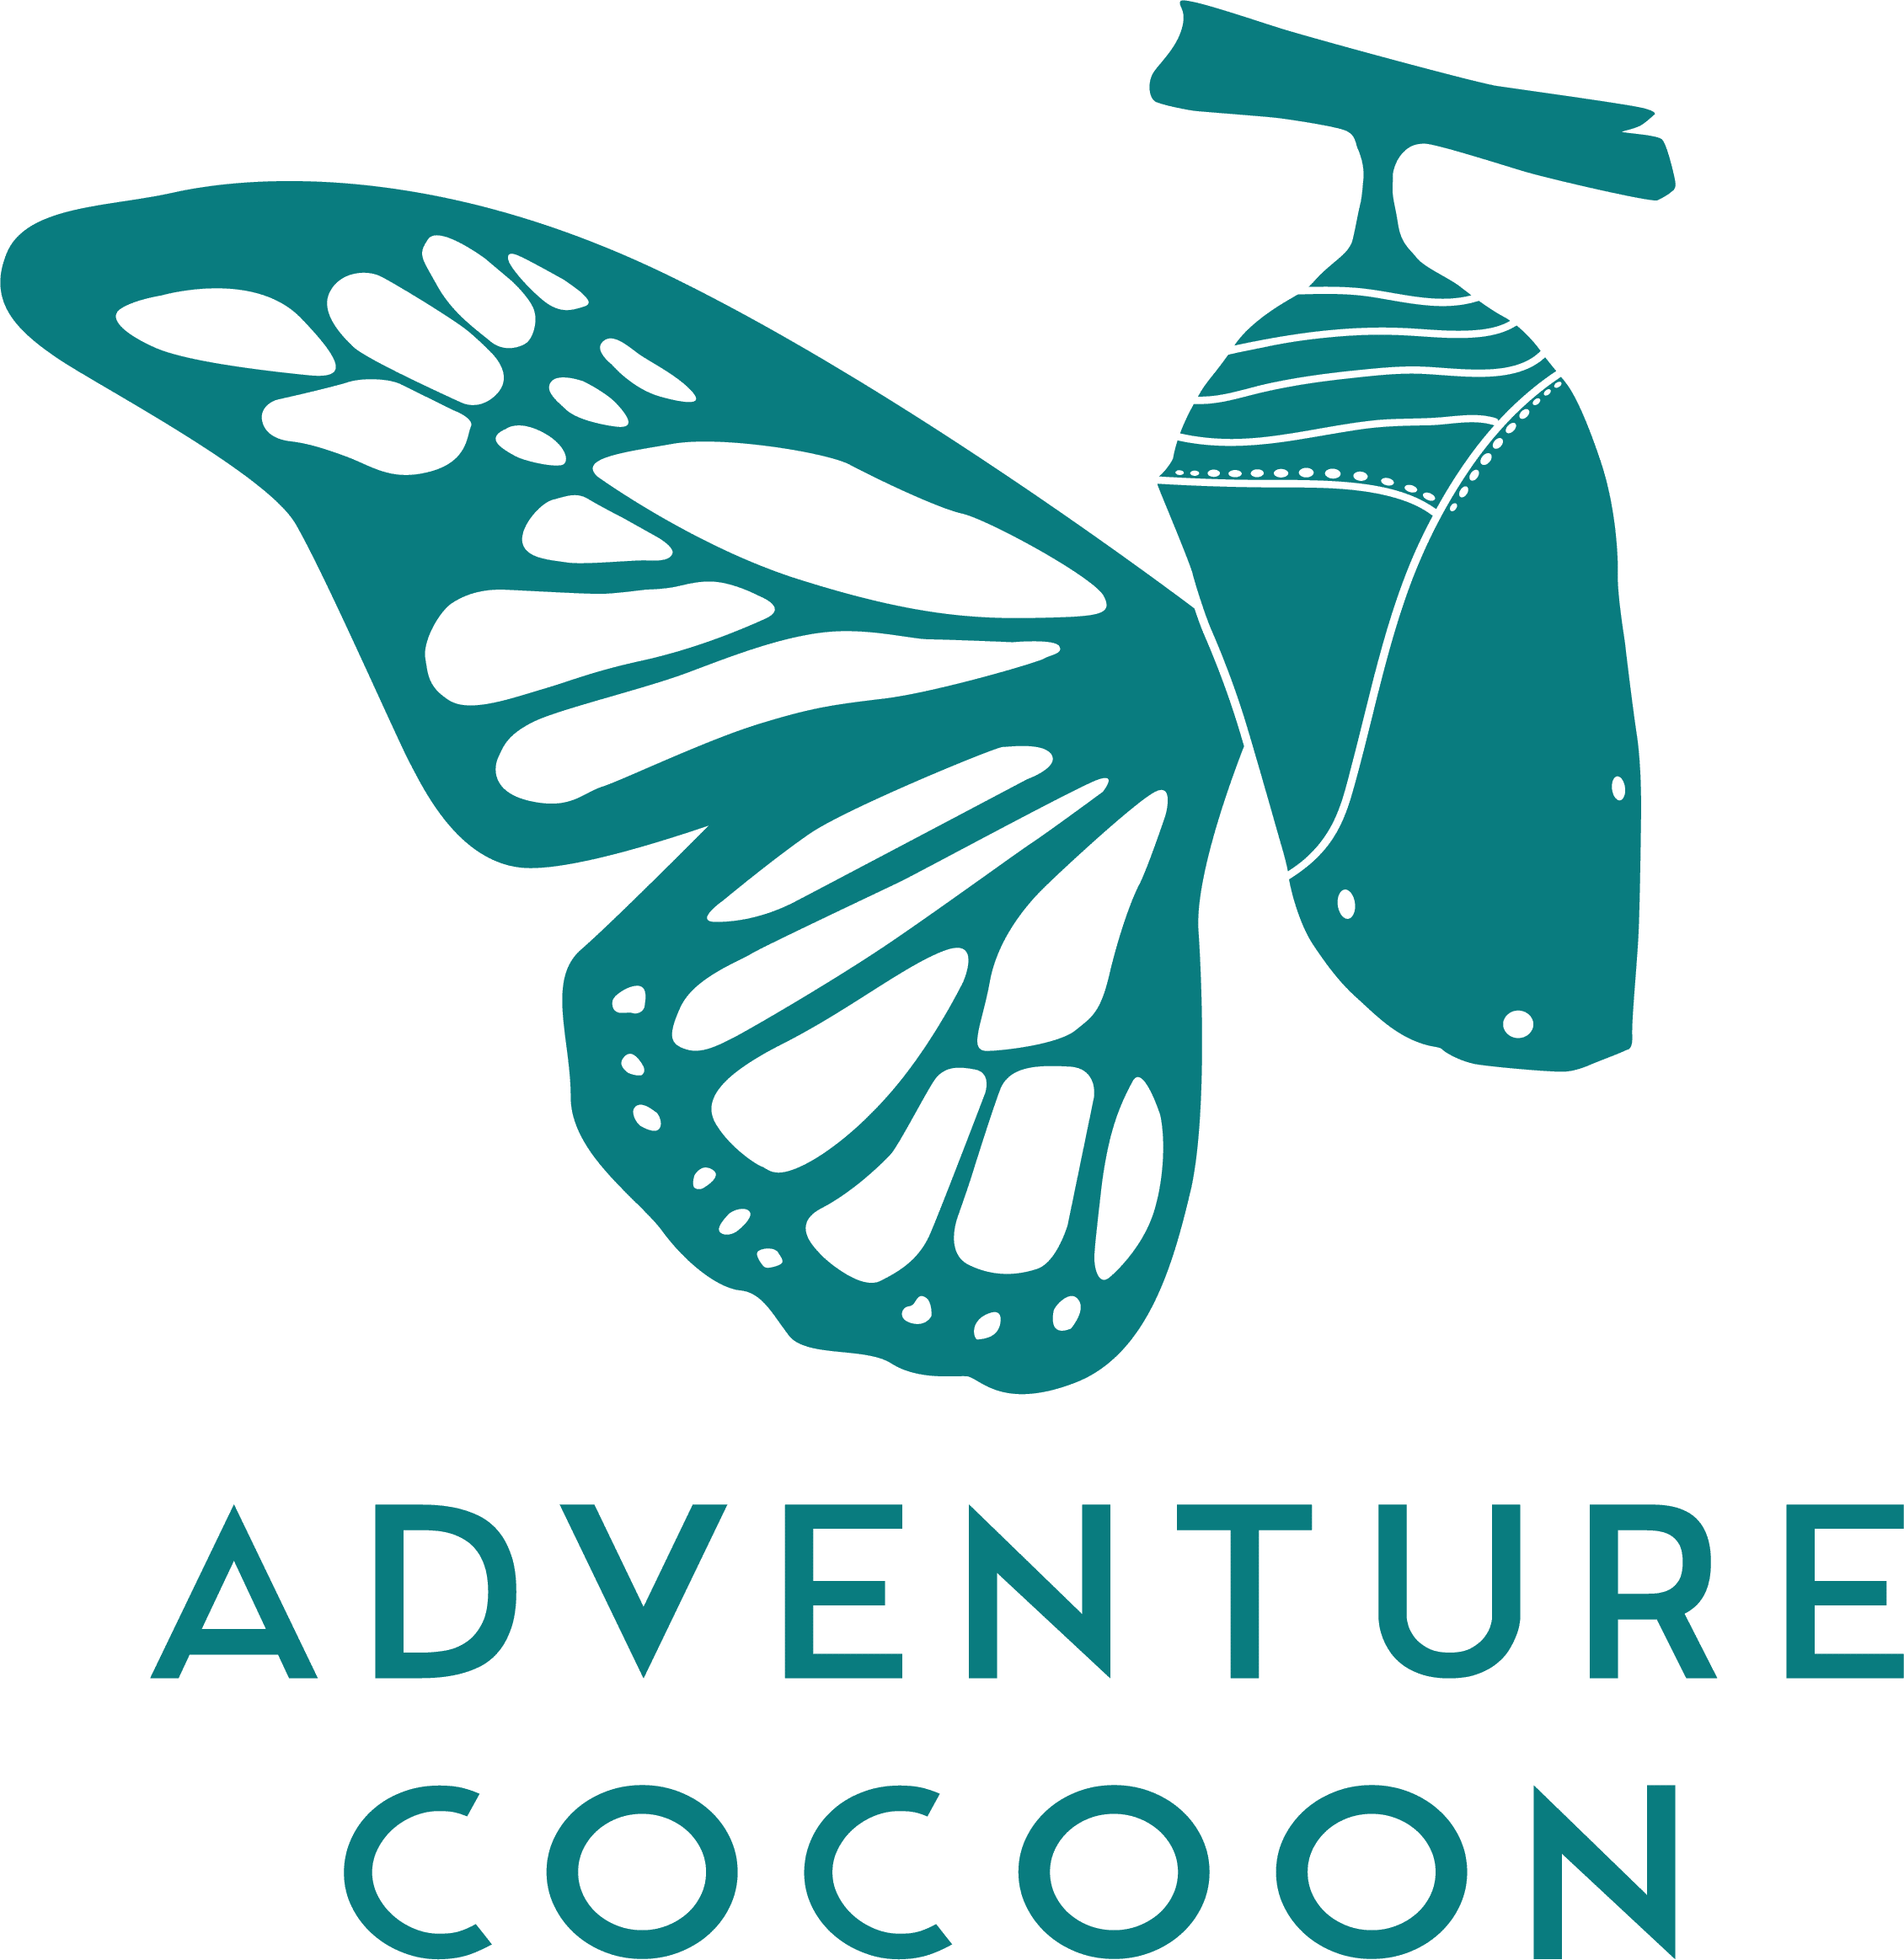 Adventure Cocoon